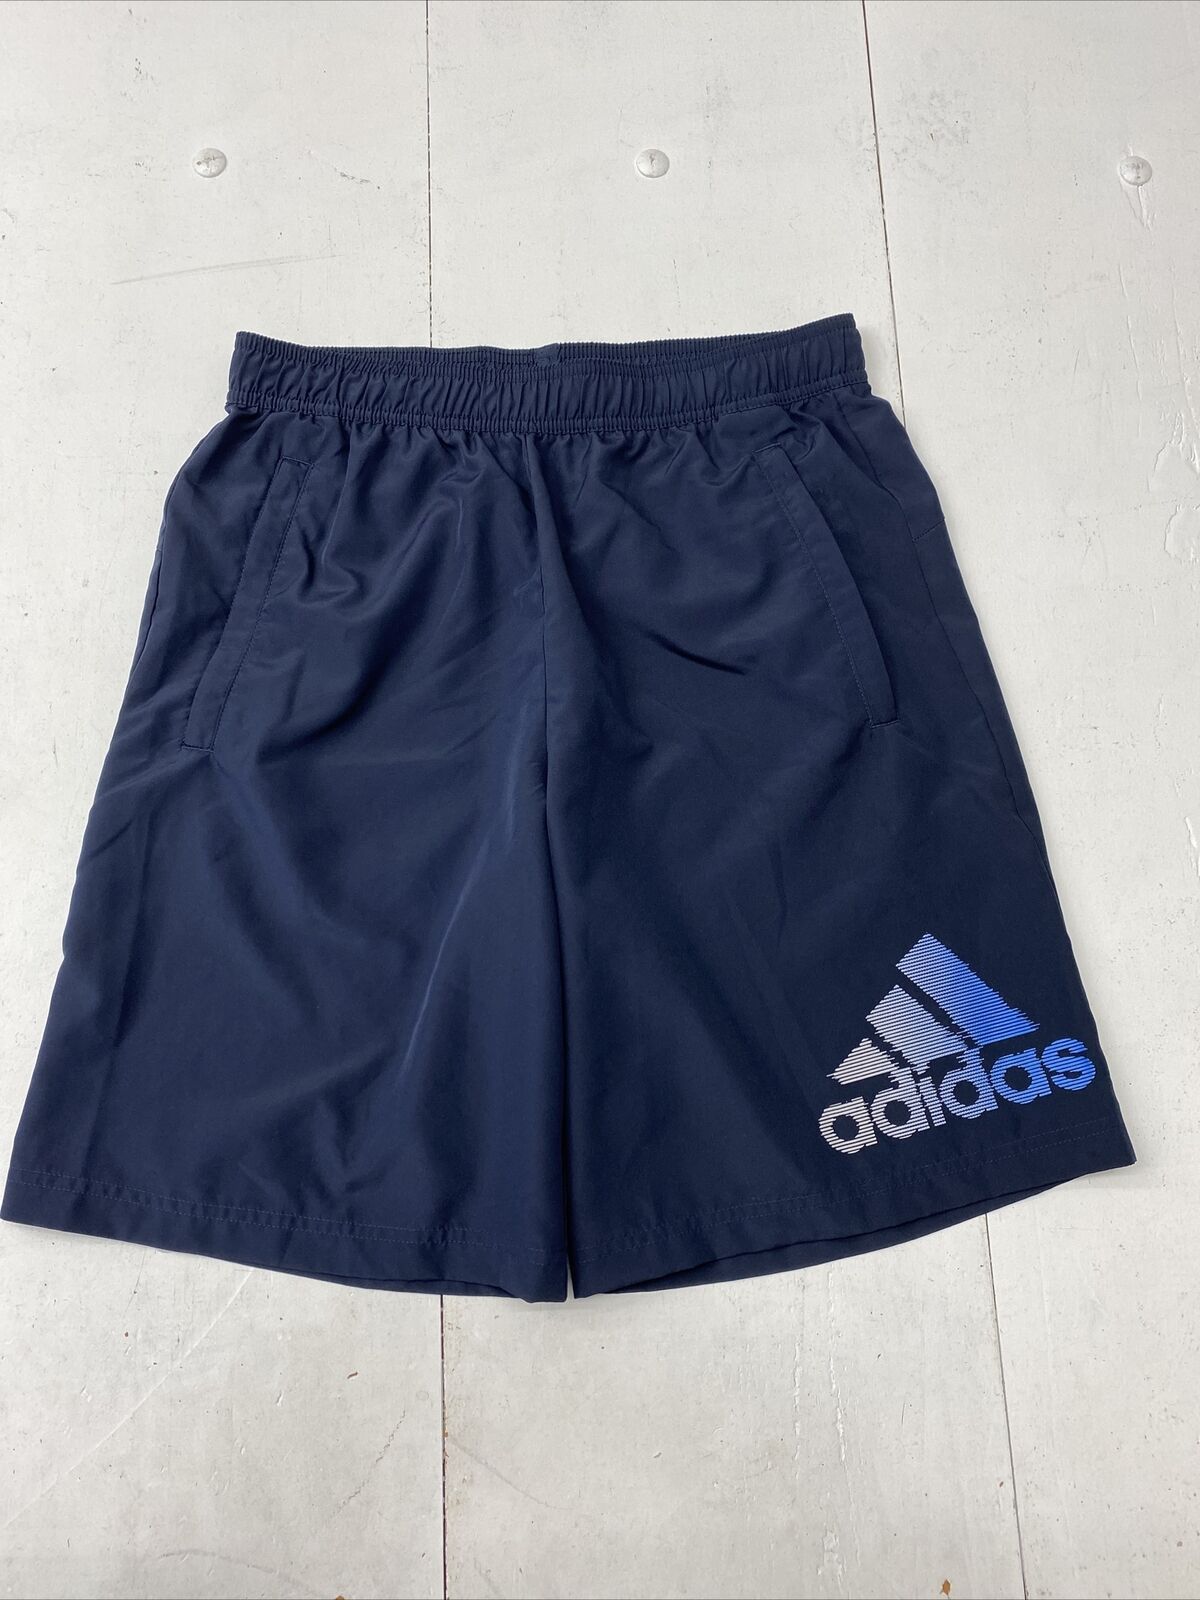 Adidas D2m logo Training Shorts Navy Blue HF7202 Zipper Pockets Mens Size M New